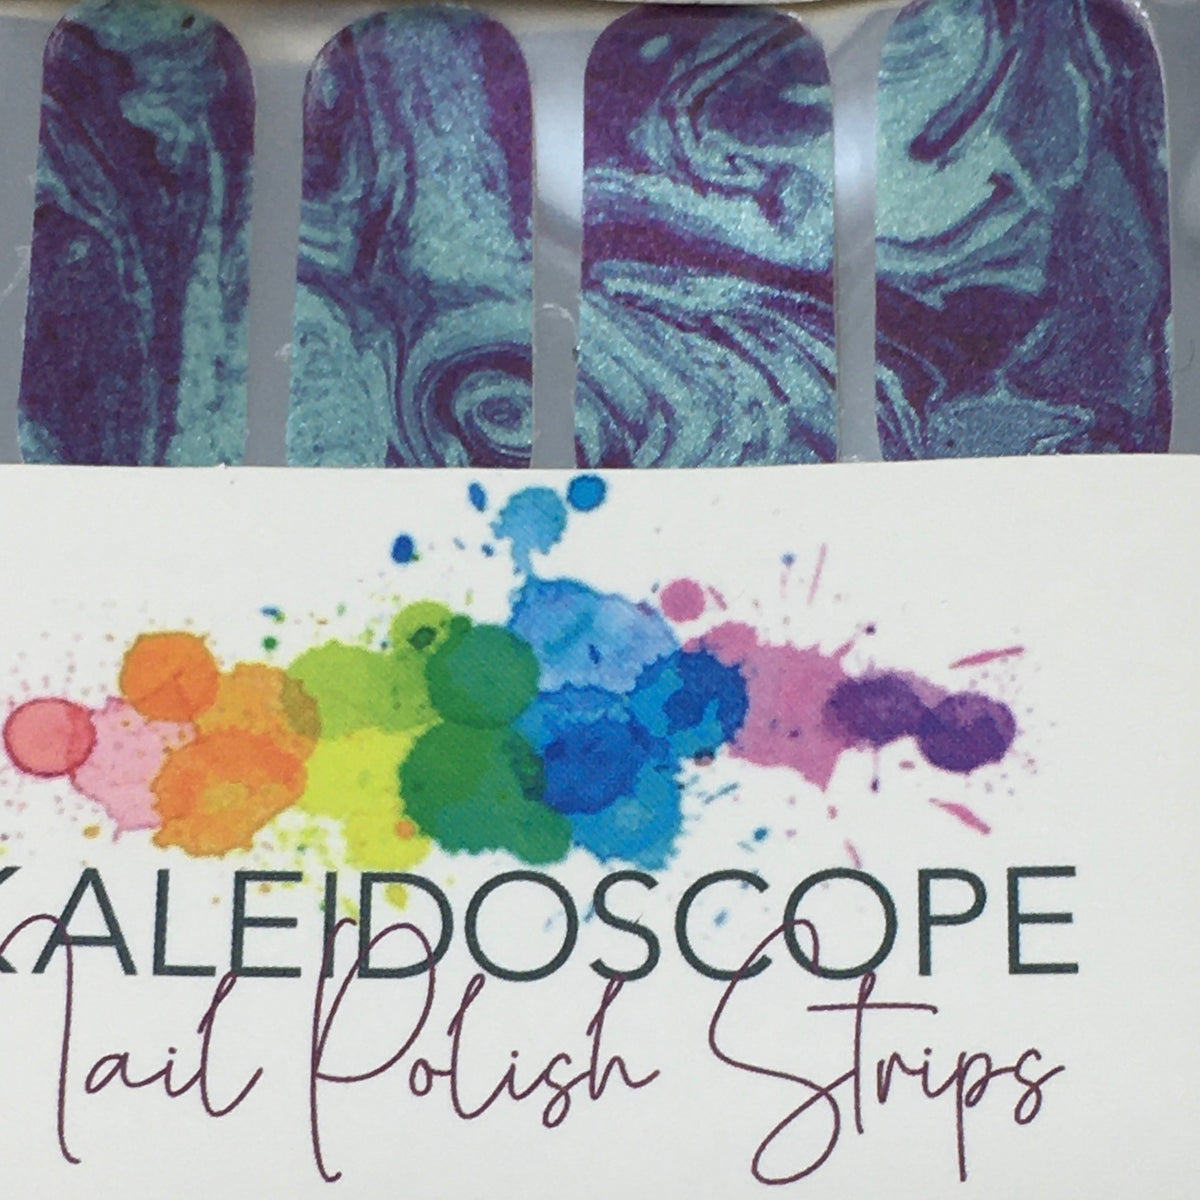 Kaleidoscope Nail Strip Everyday Collection